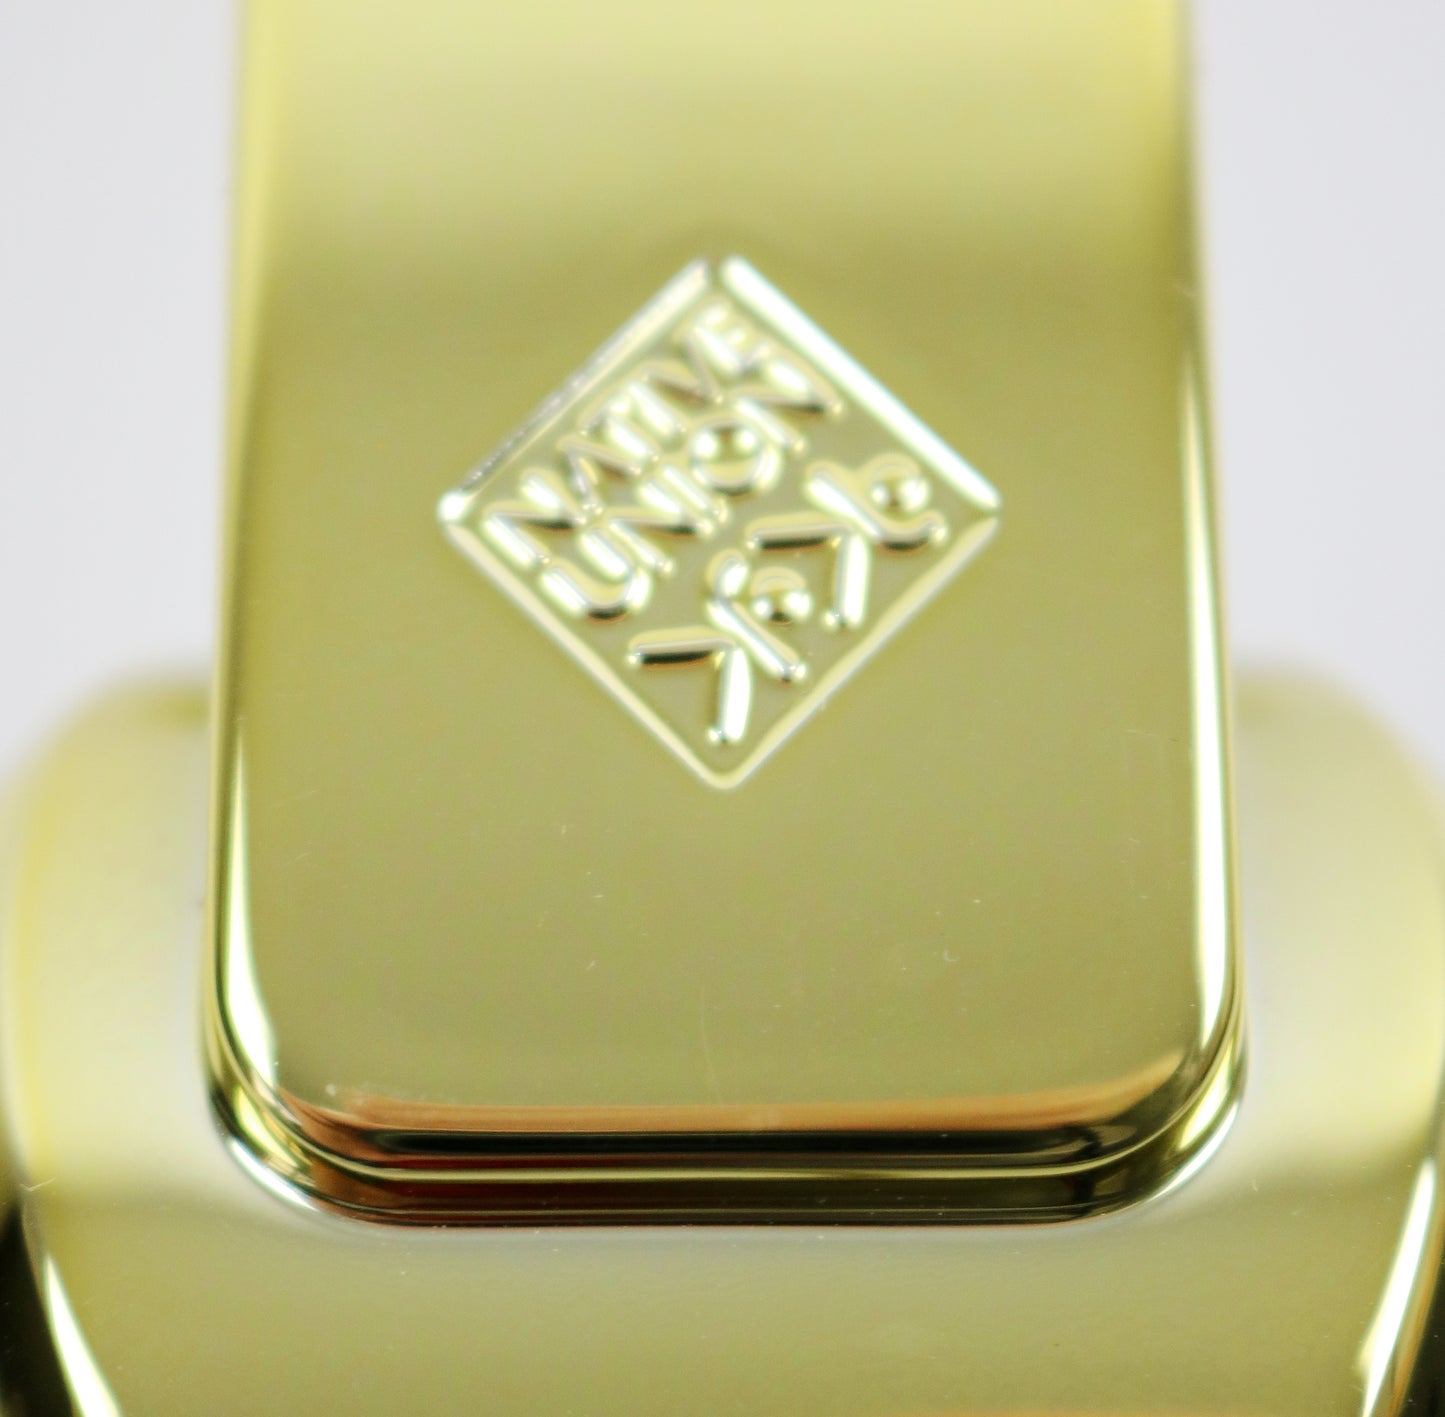 Limited Edition Moshi Moshi gold by David Turpin 2009 - phone handset